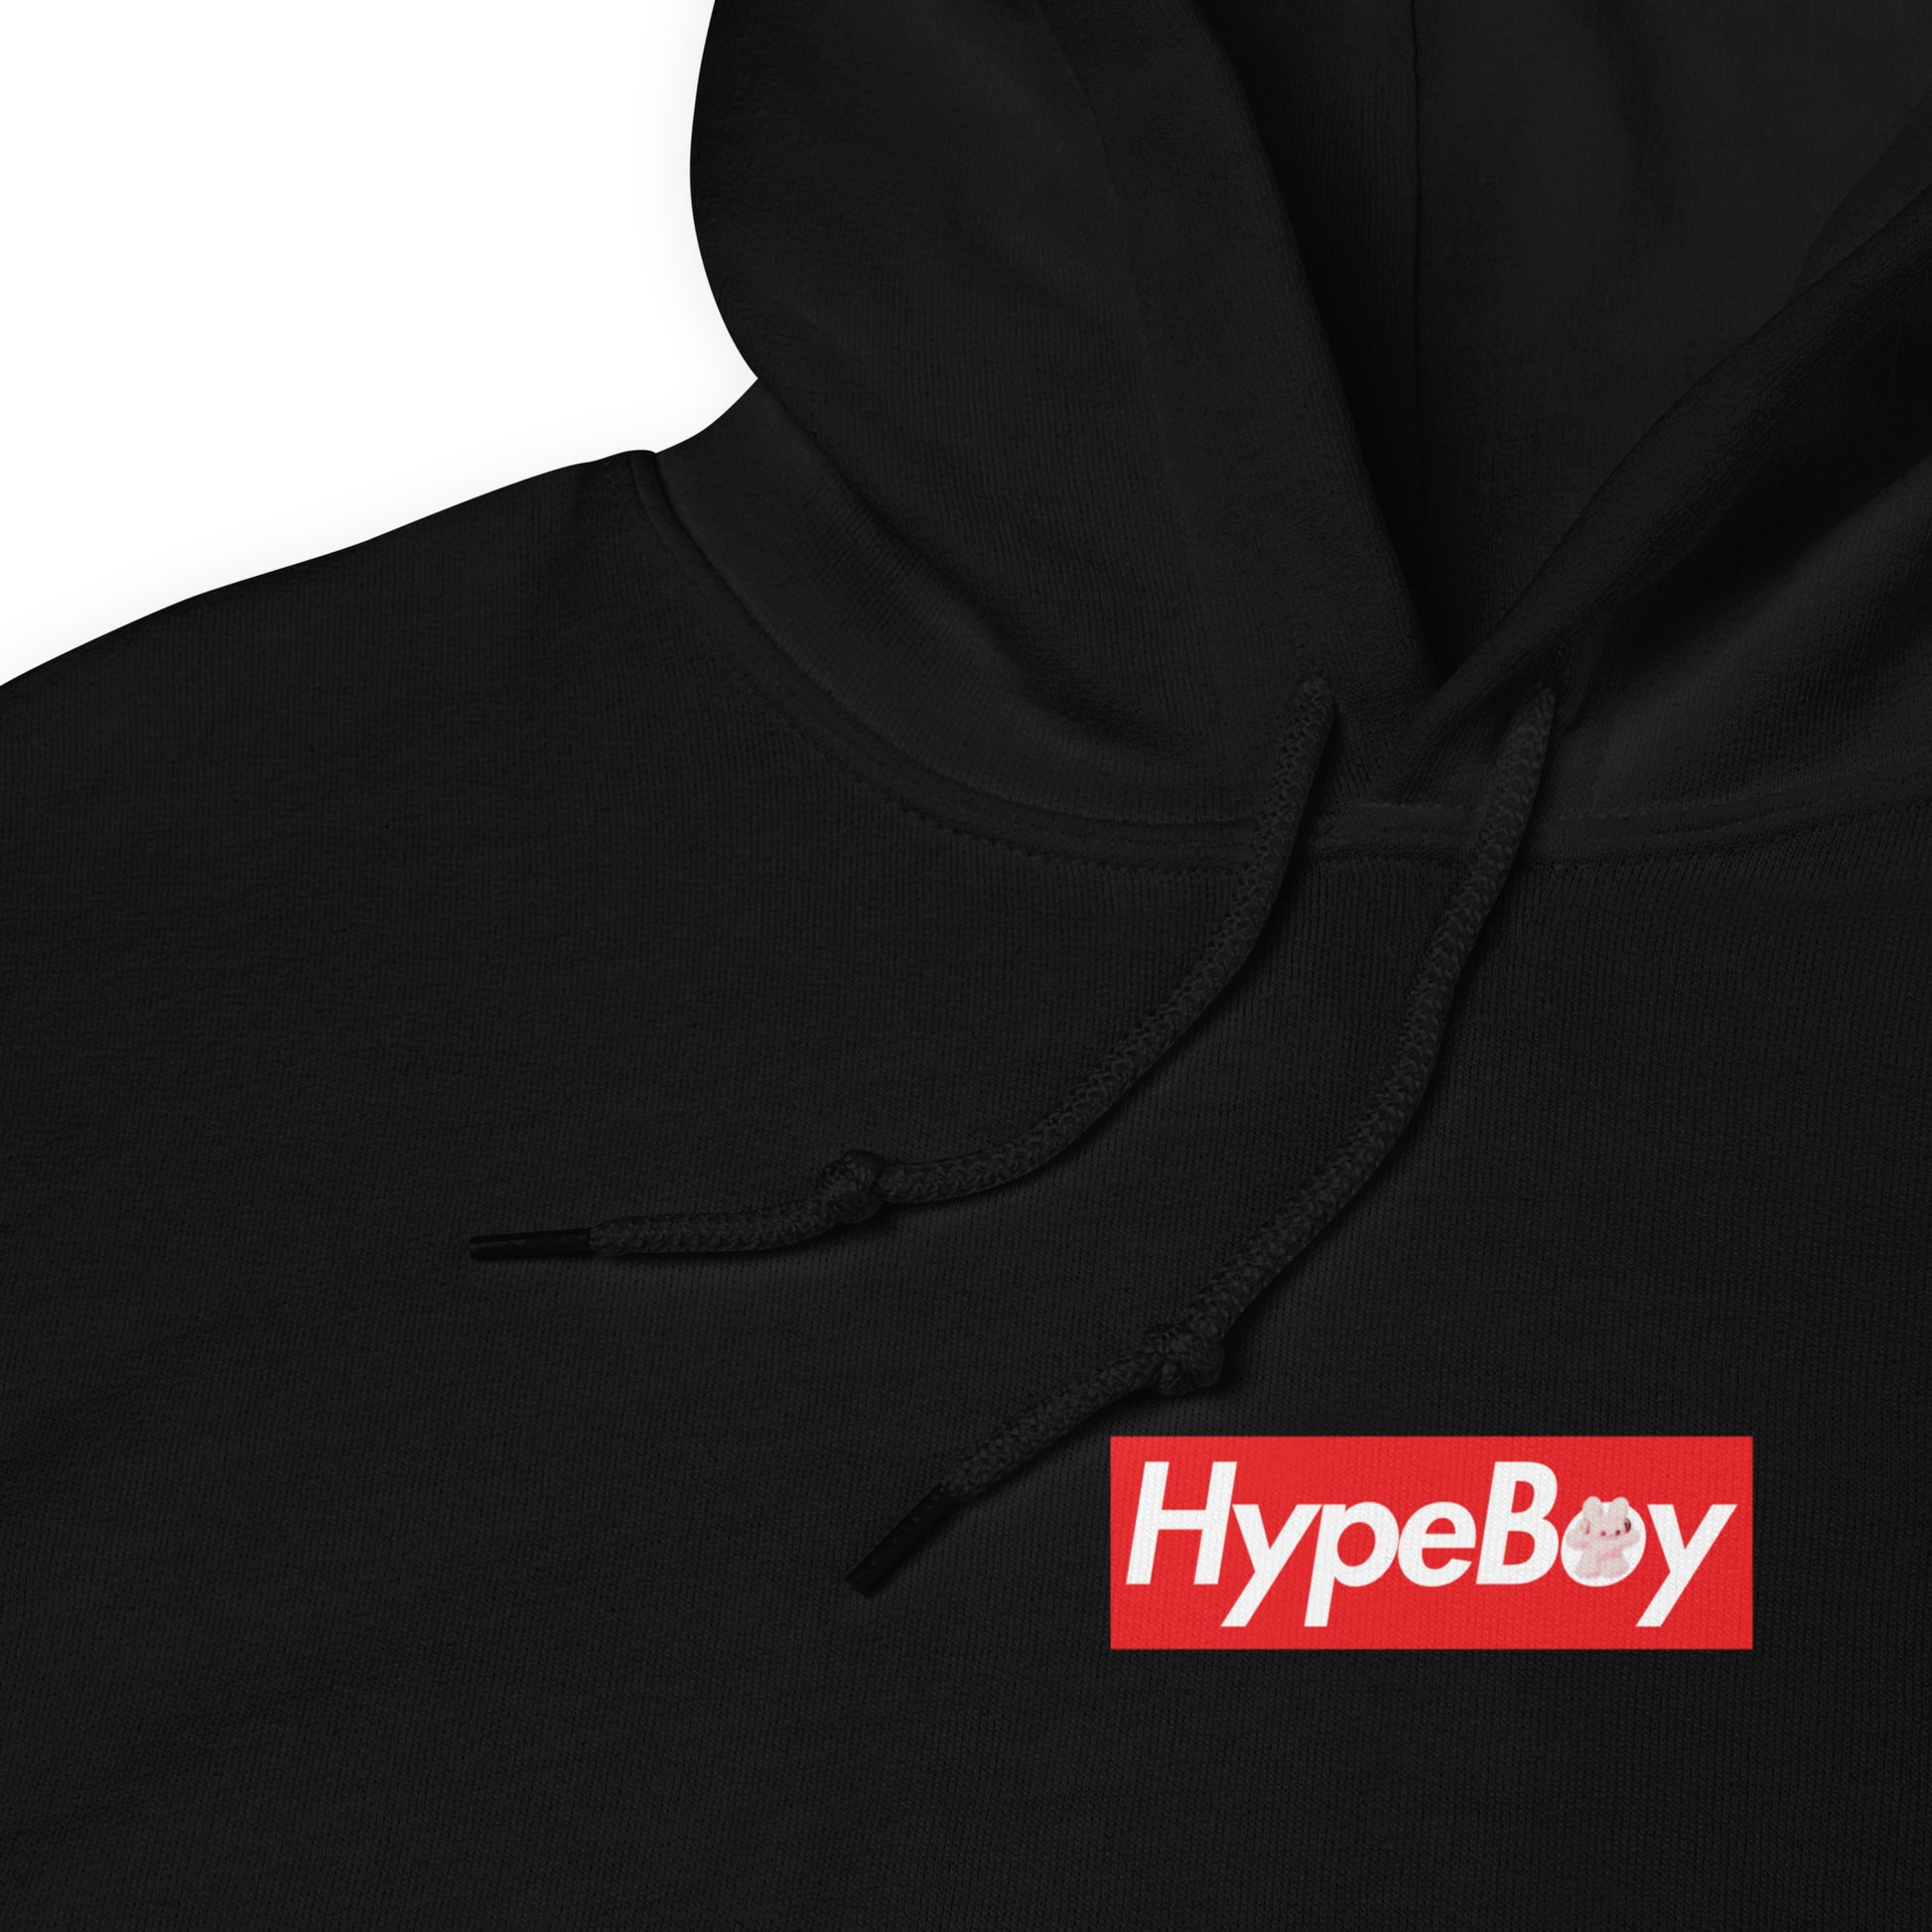 newjeans inspired merch kpop hoodie new jeans hoody hypeboy